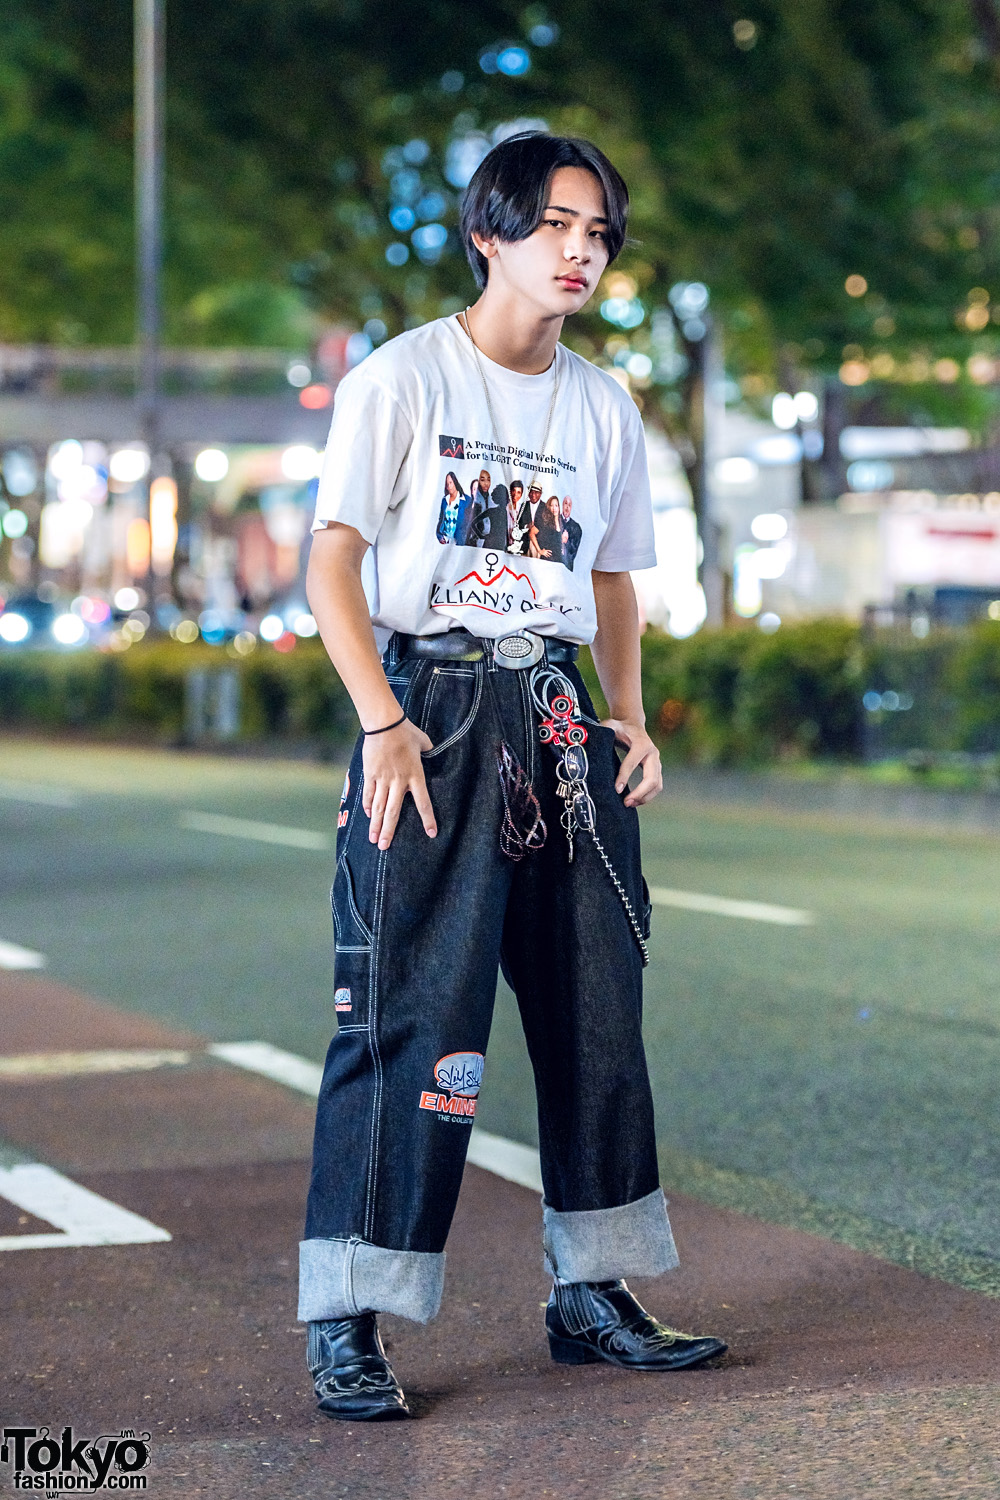 Harajuku Guy's Minimalist Street Style w/ Jillian's Peak T-Shirt, Eminem Rolled-Up Pants & Leather Chelsea Boots